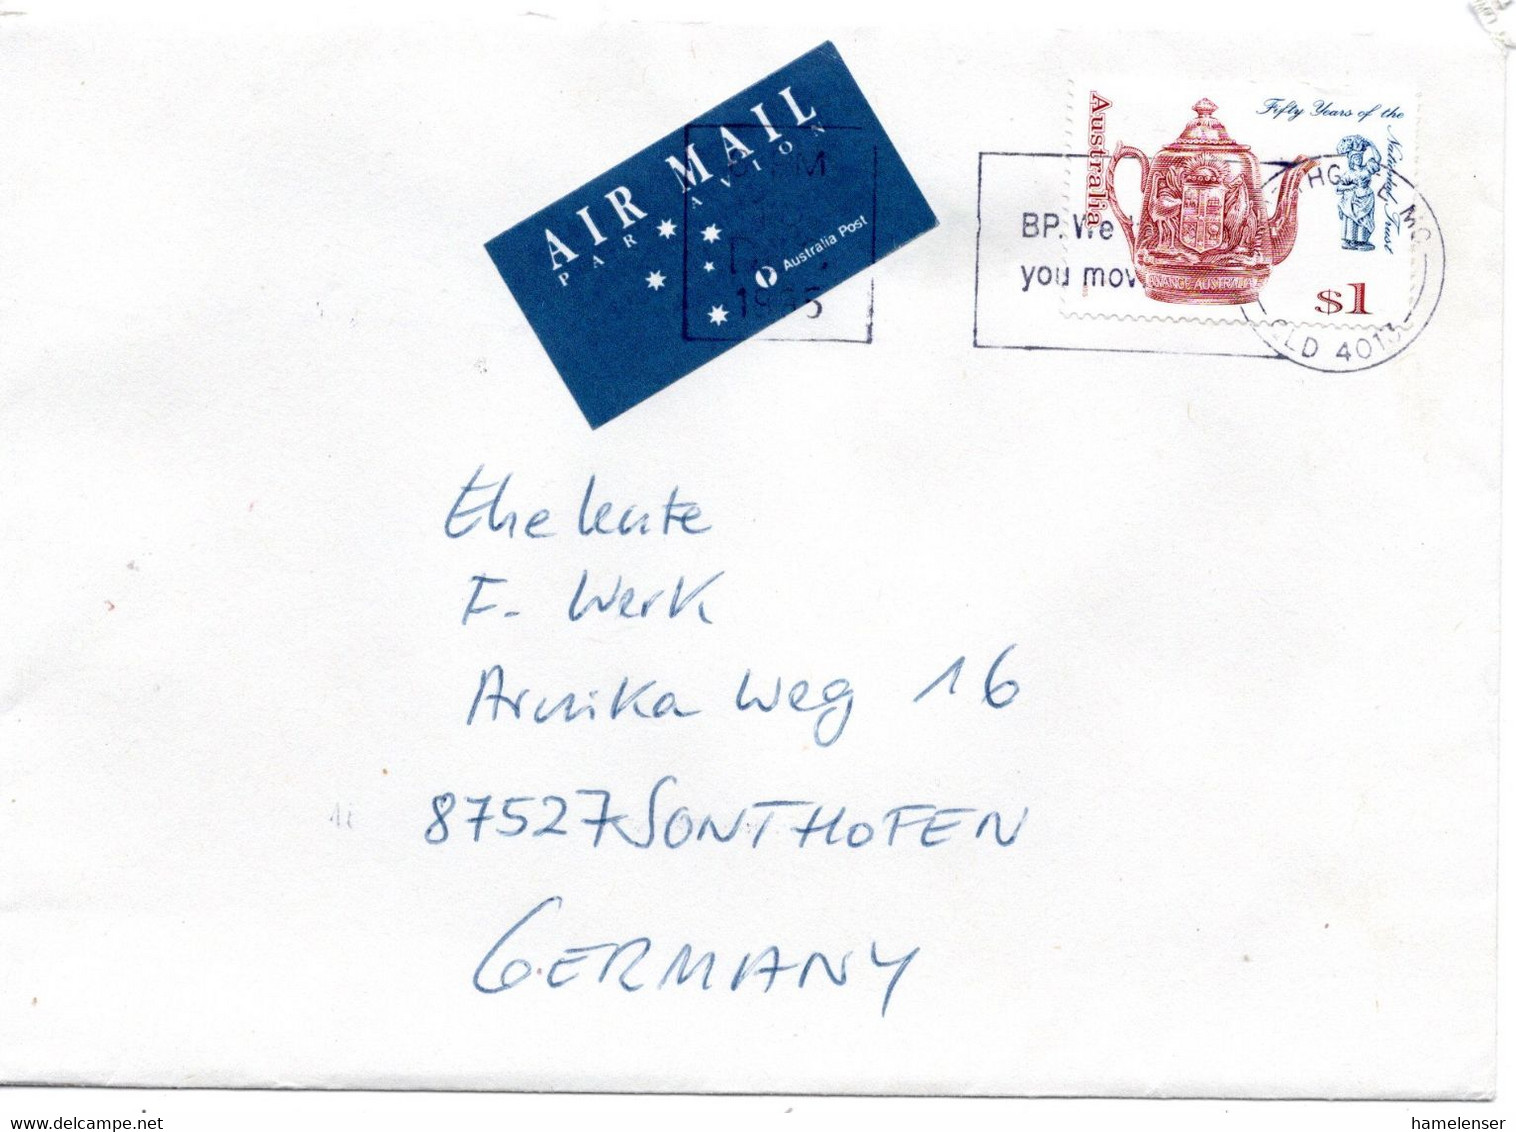 62524 - Australien - 1995 - $1 National Trust Of Australia EF A LpBf NORTHGATE MC QLD -> Deutschland - Covers & Documents